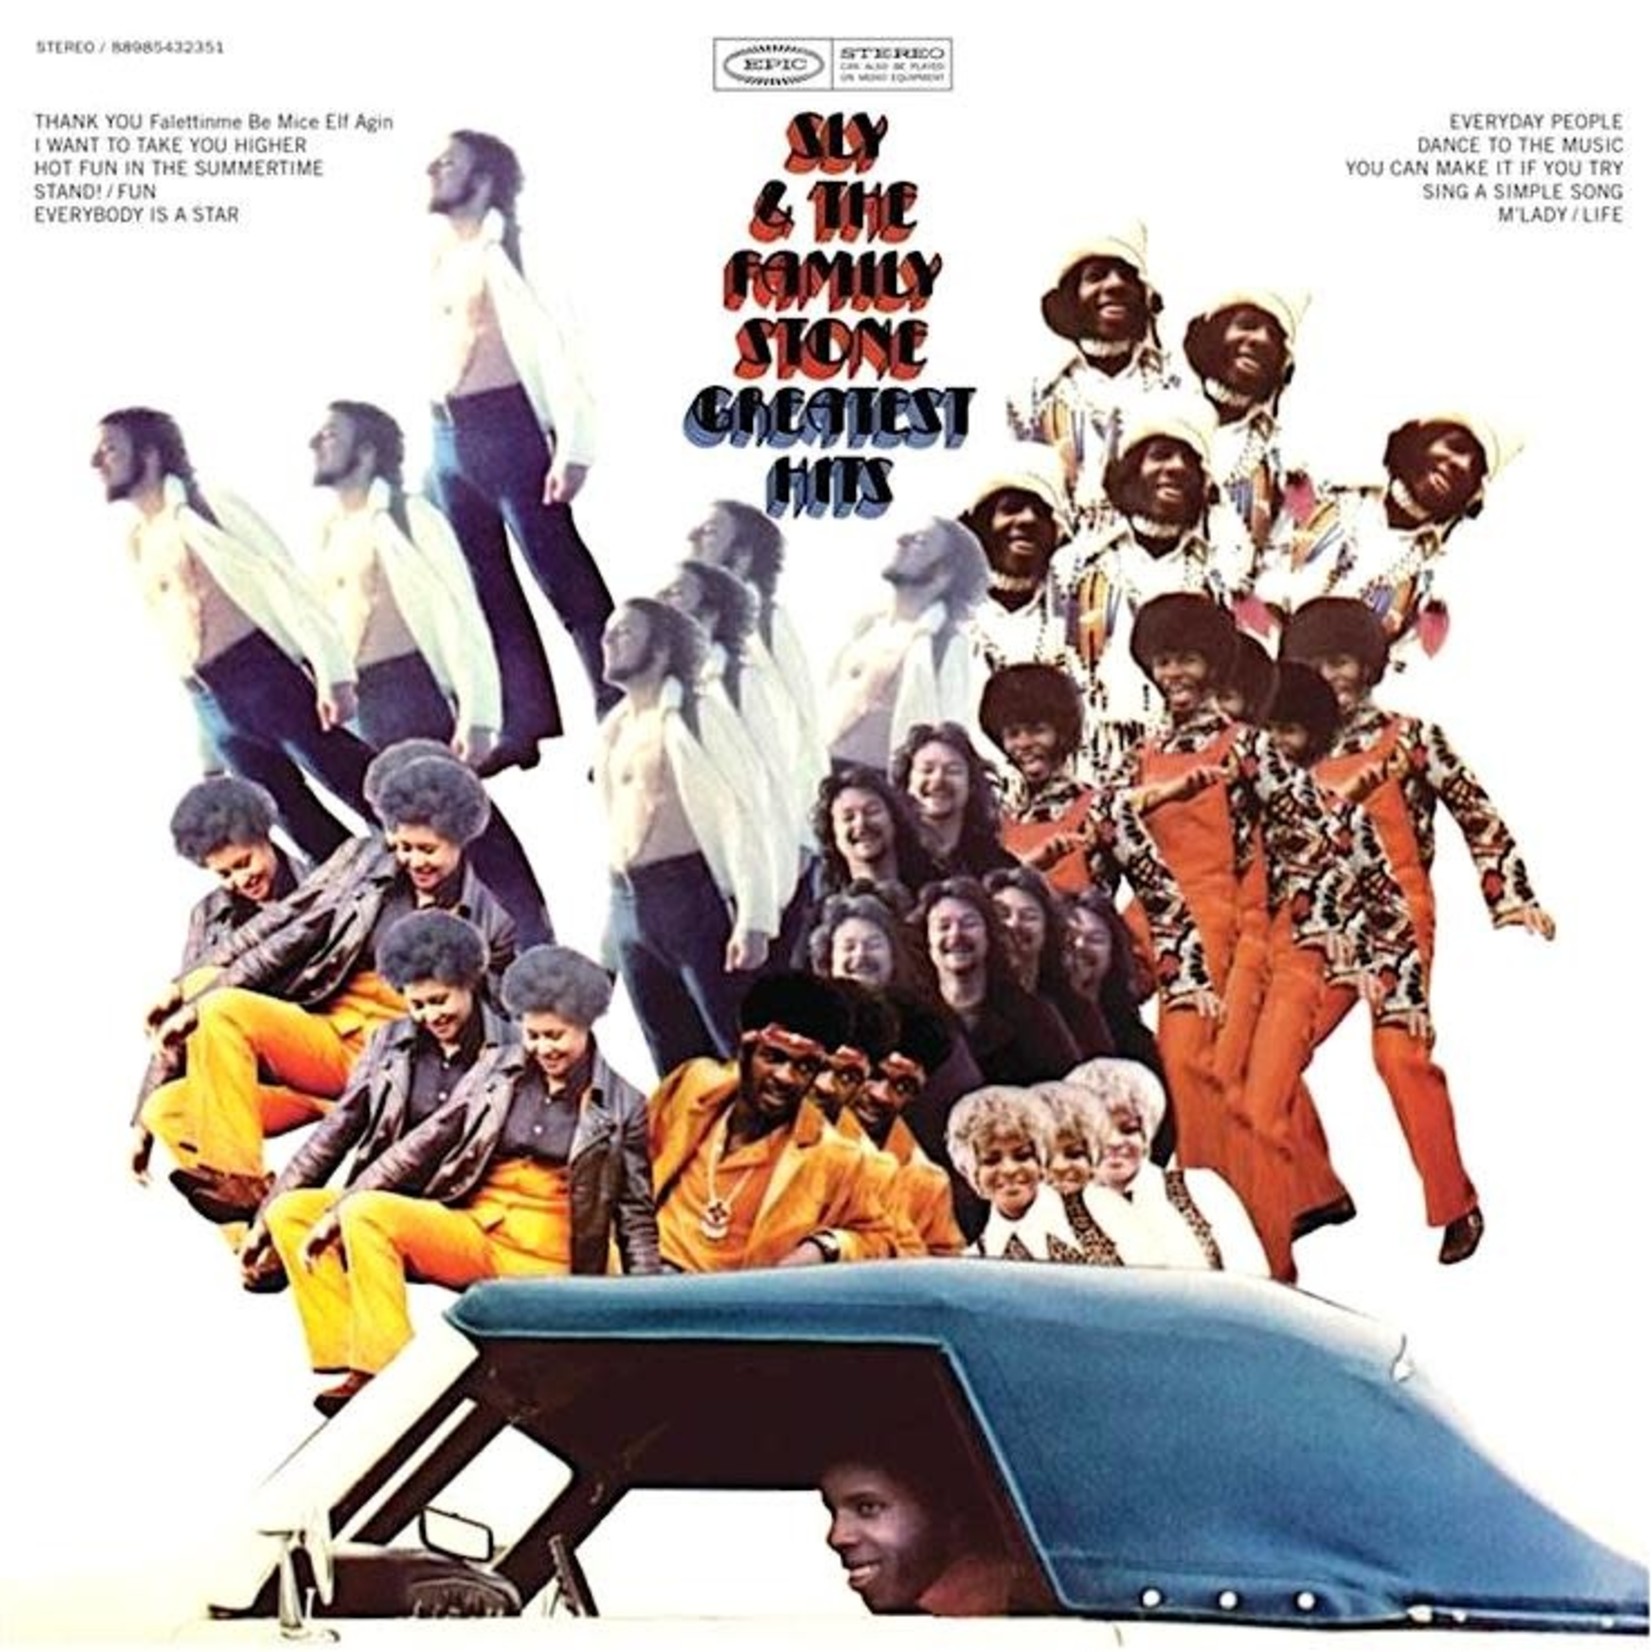 [New] Sly & the Family Stone - Greatest Hits